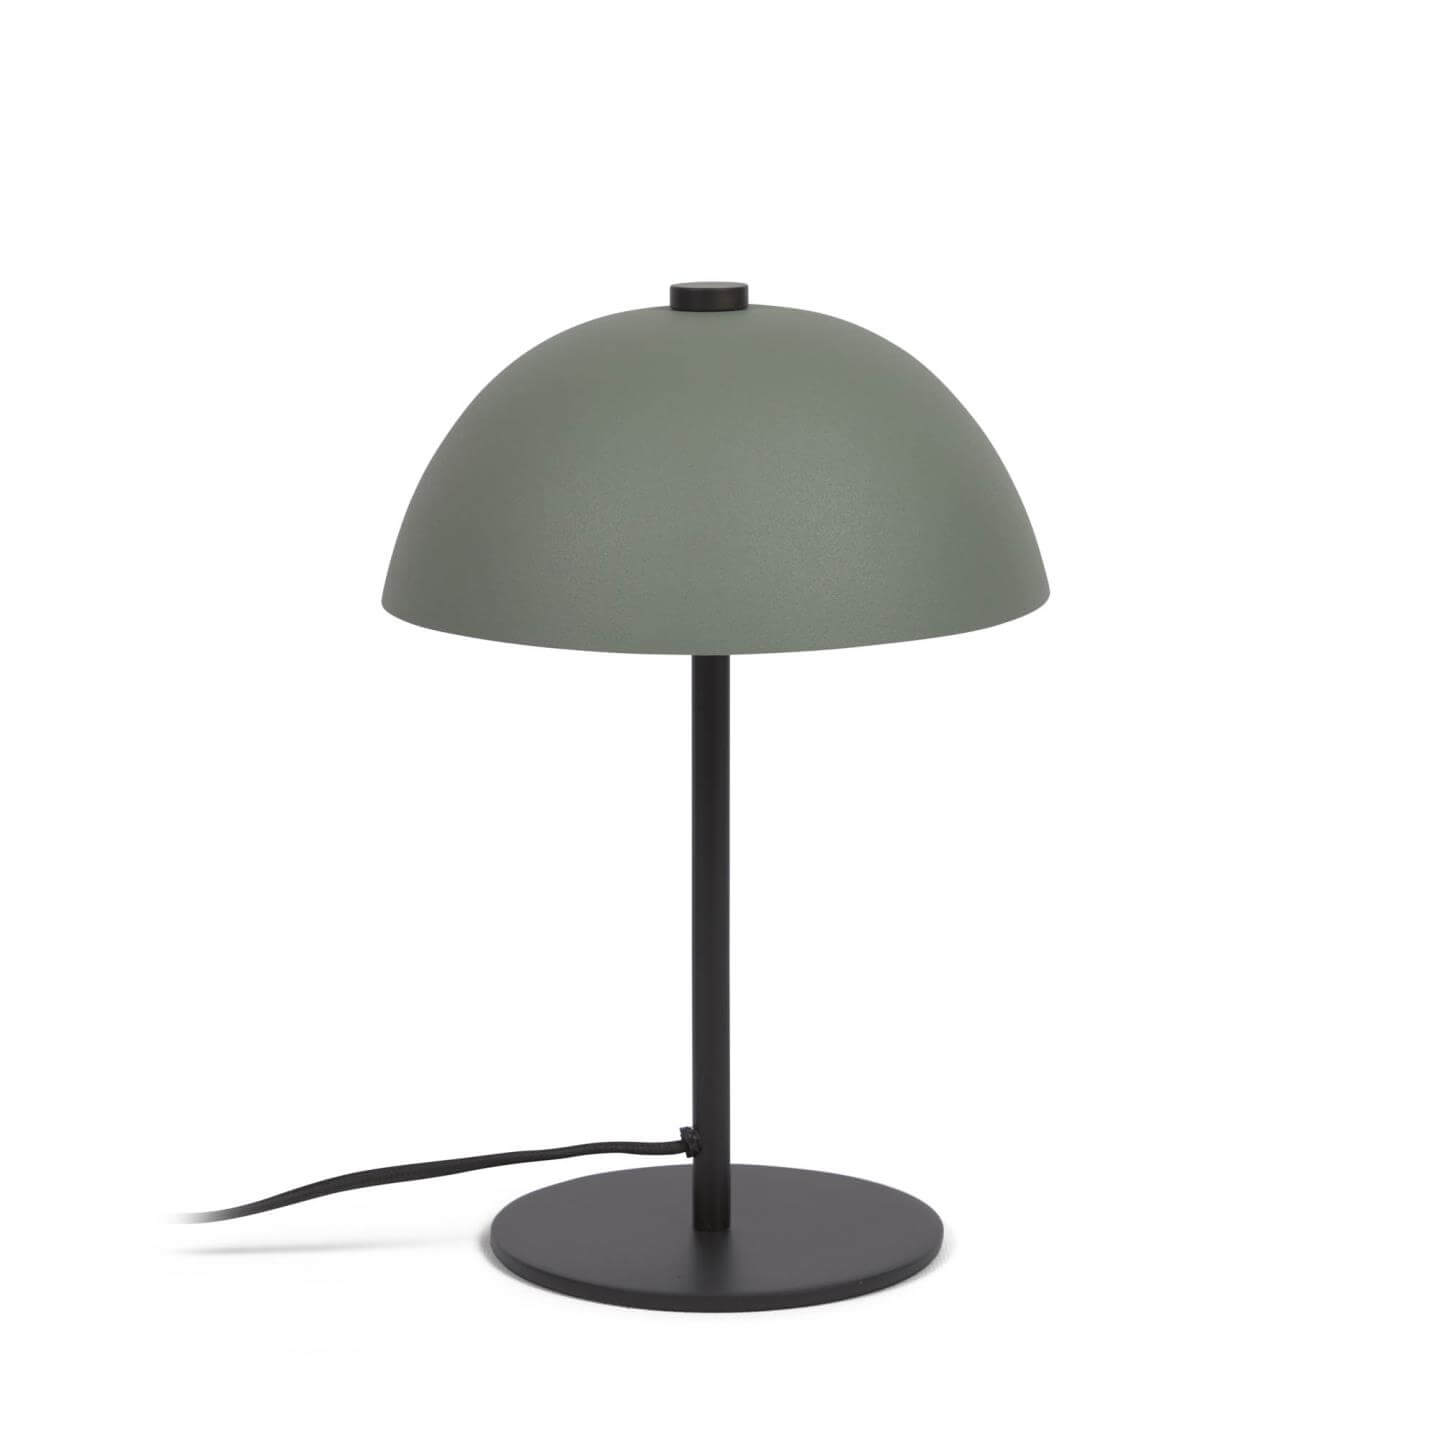 LAFORMA Aleyla bordlampe - grøn og sort metal